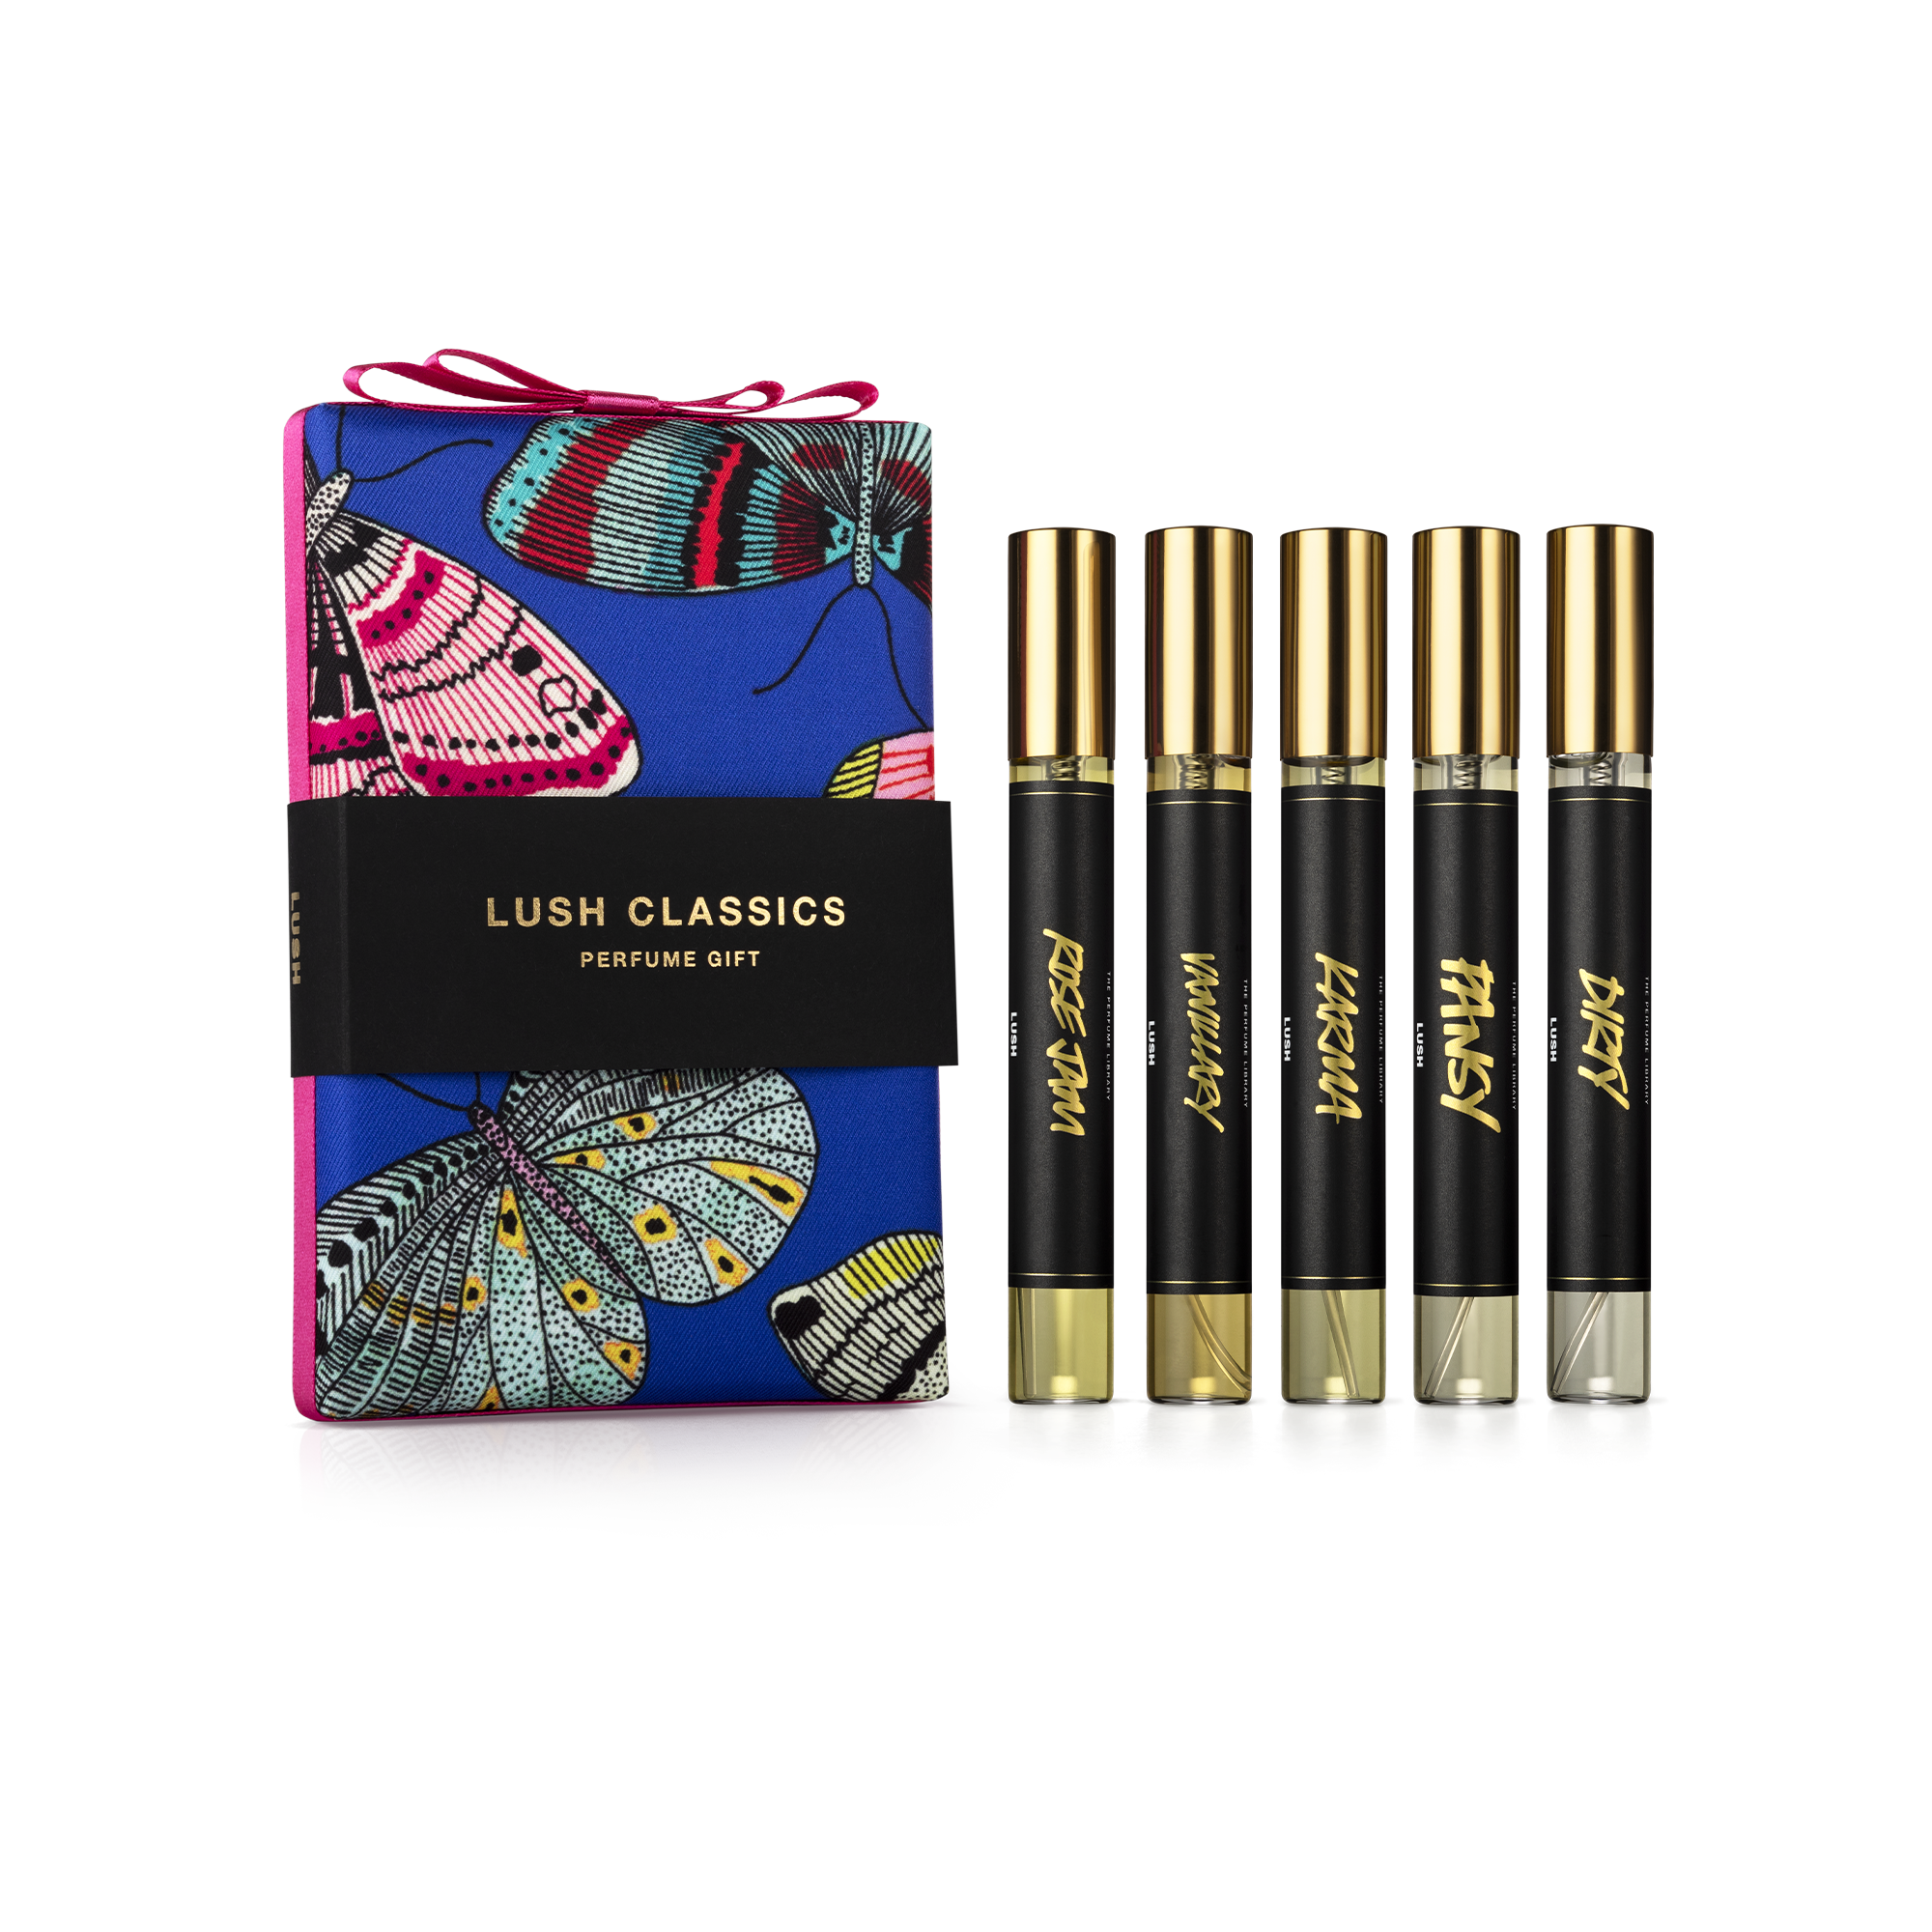 Lush Classics Perfume Discovery Box